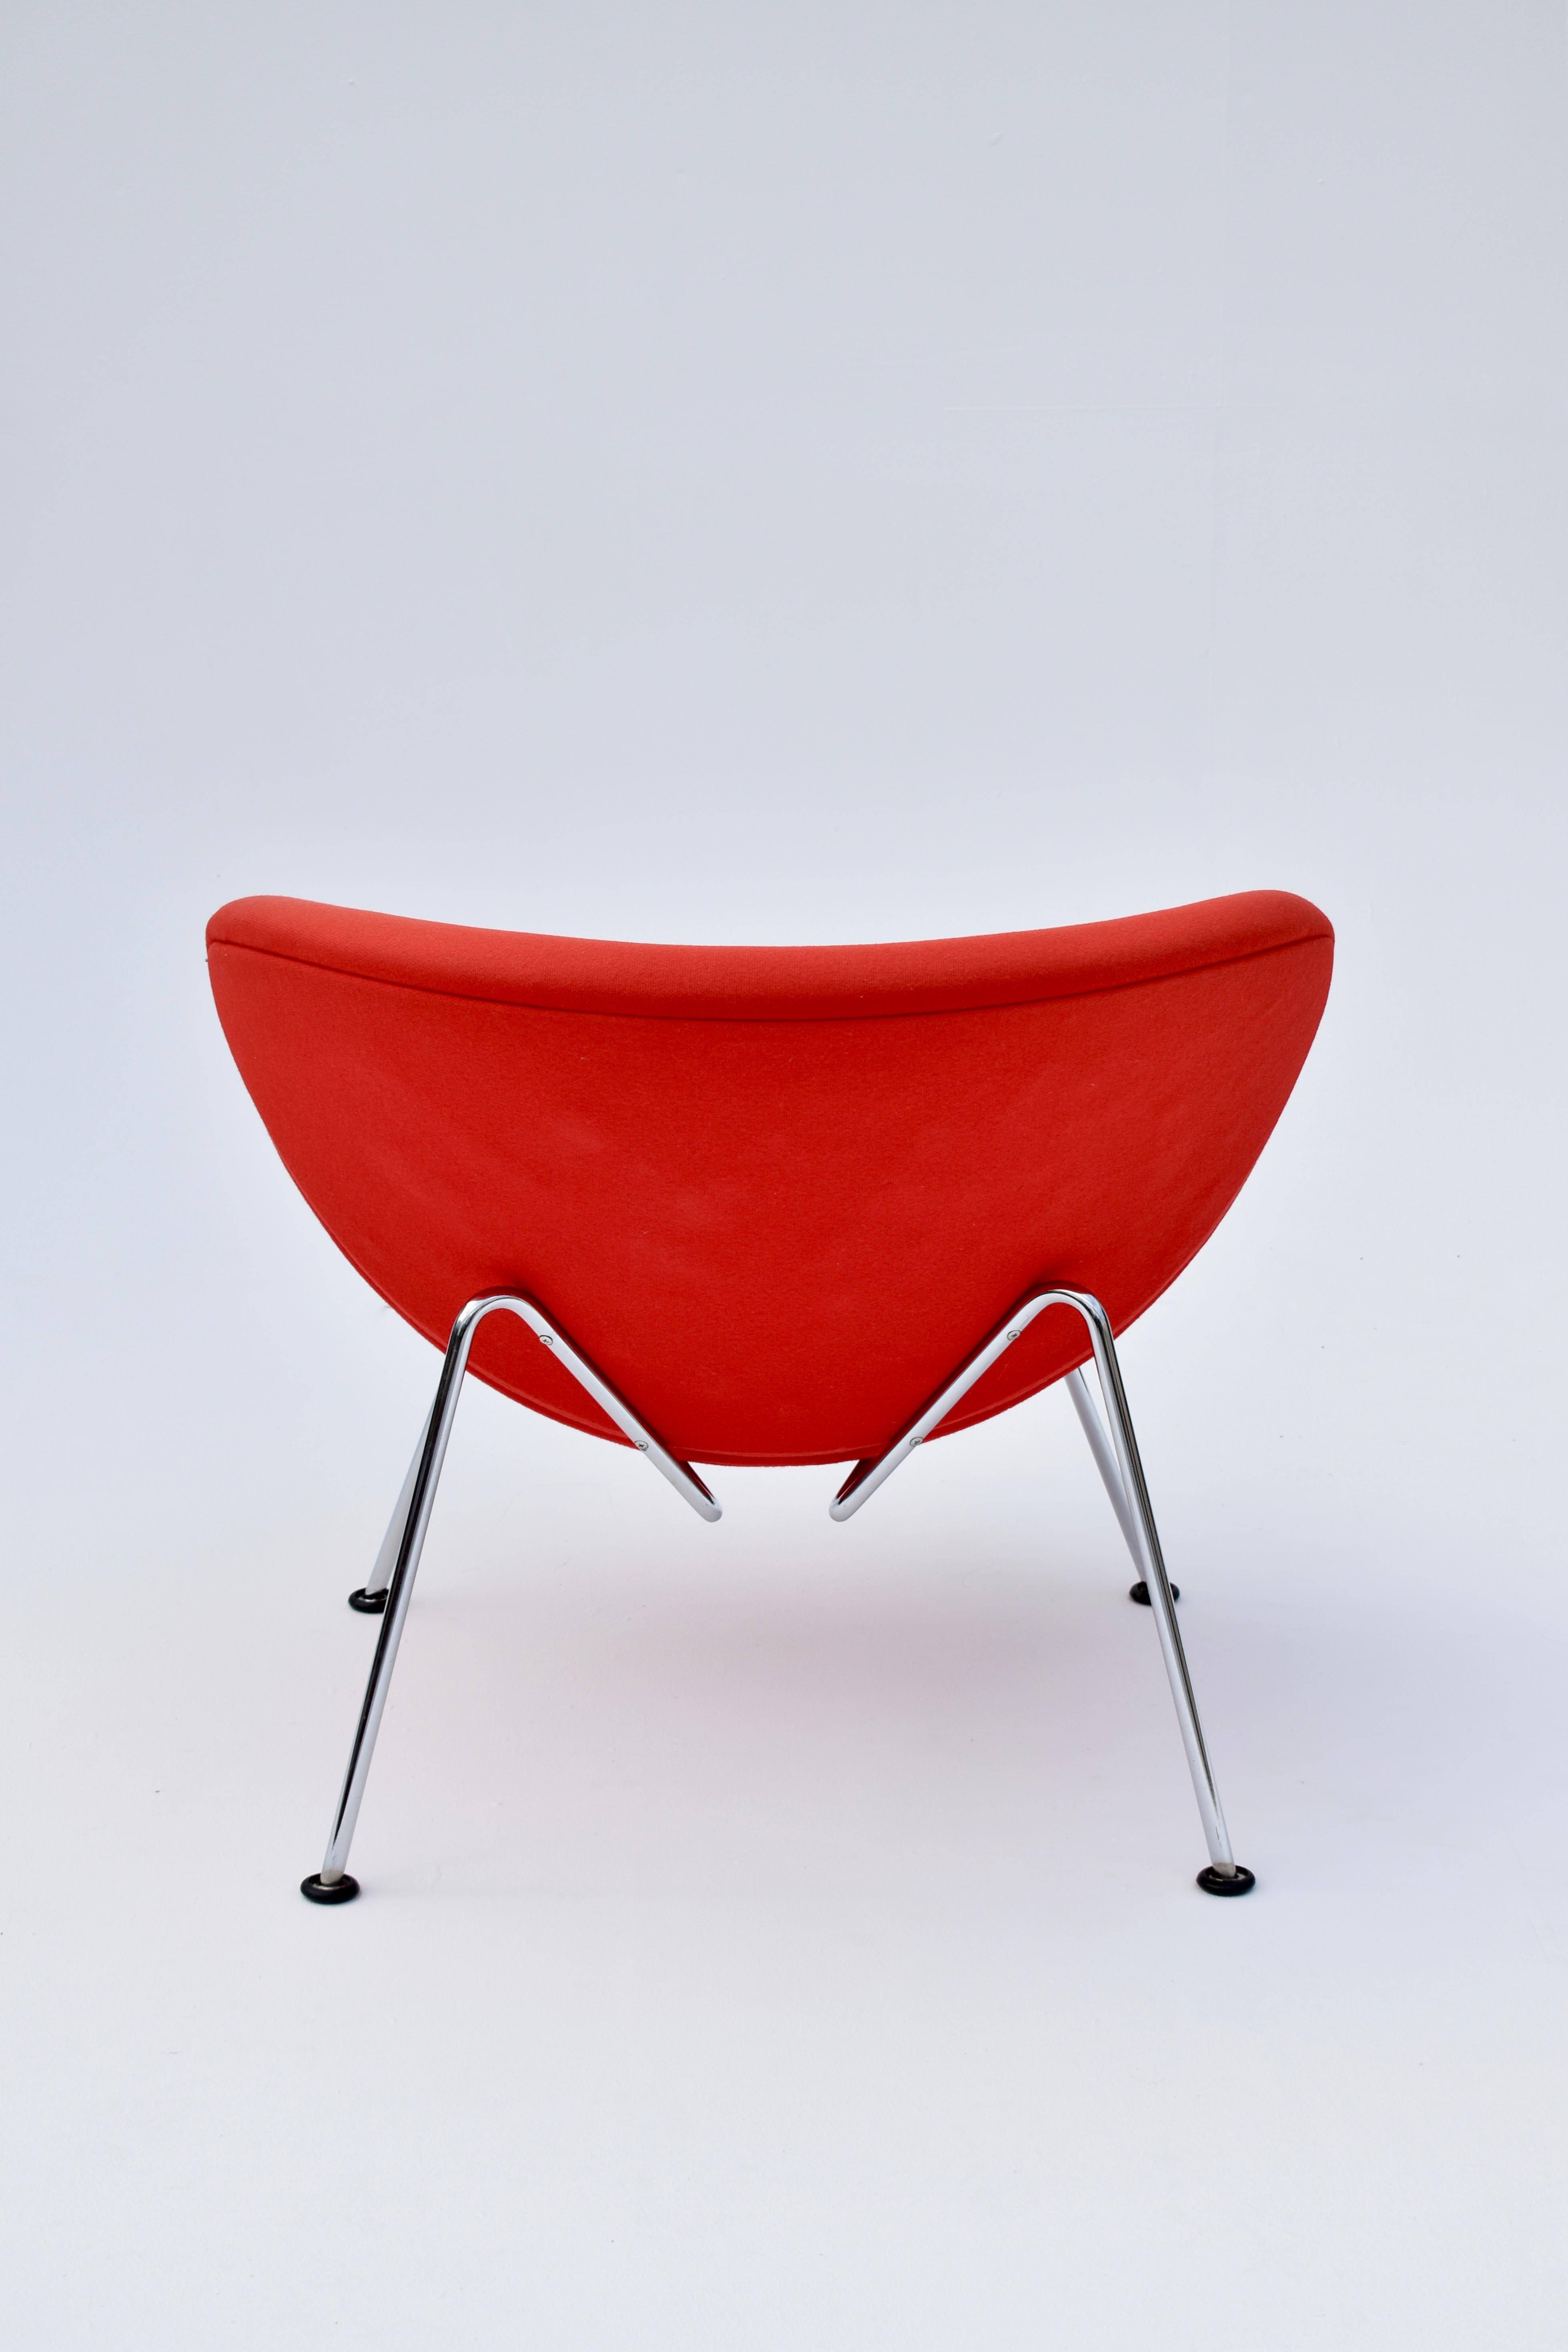 Pierre Paulin Orange Slice Chair for Artifort 2